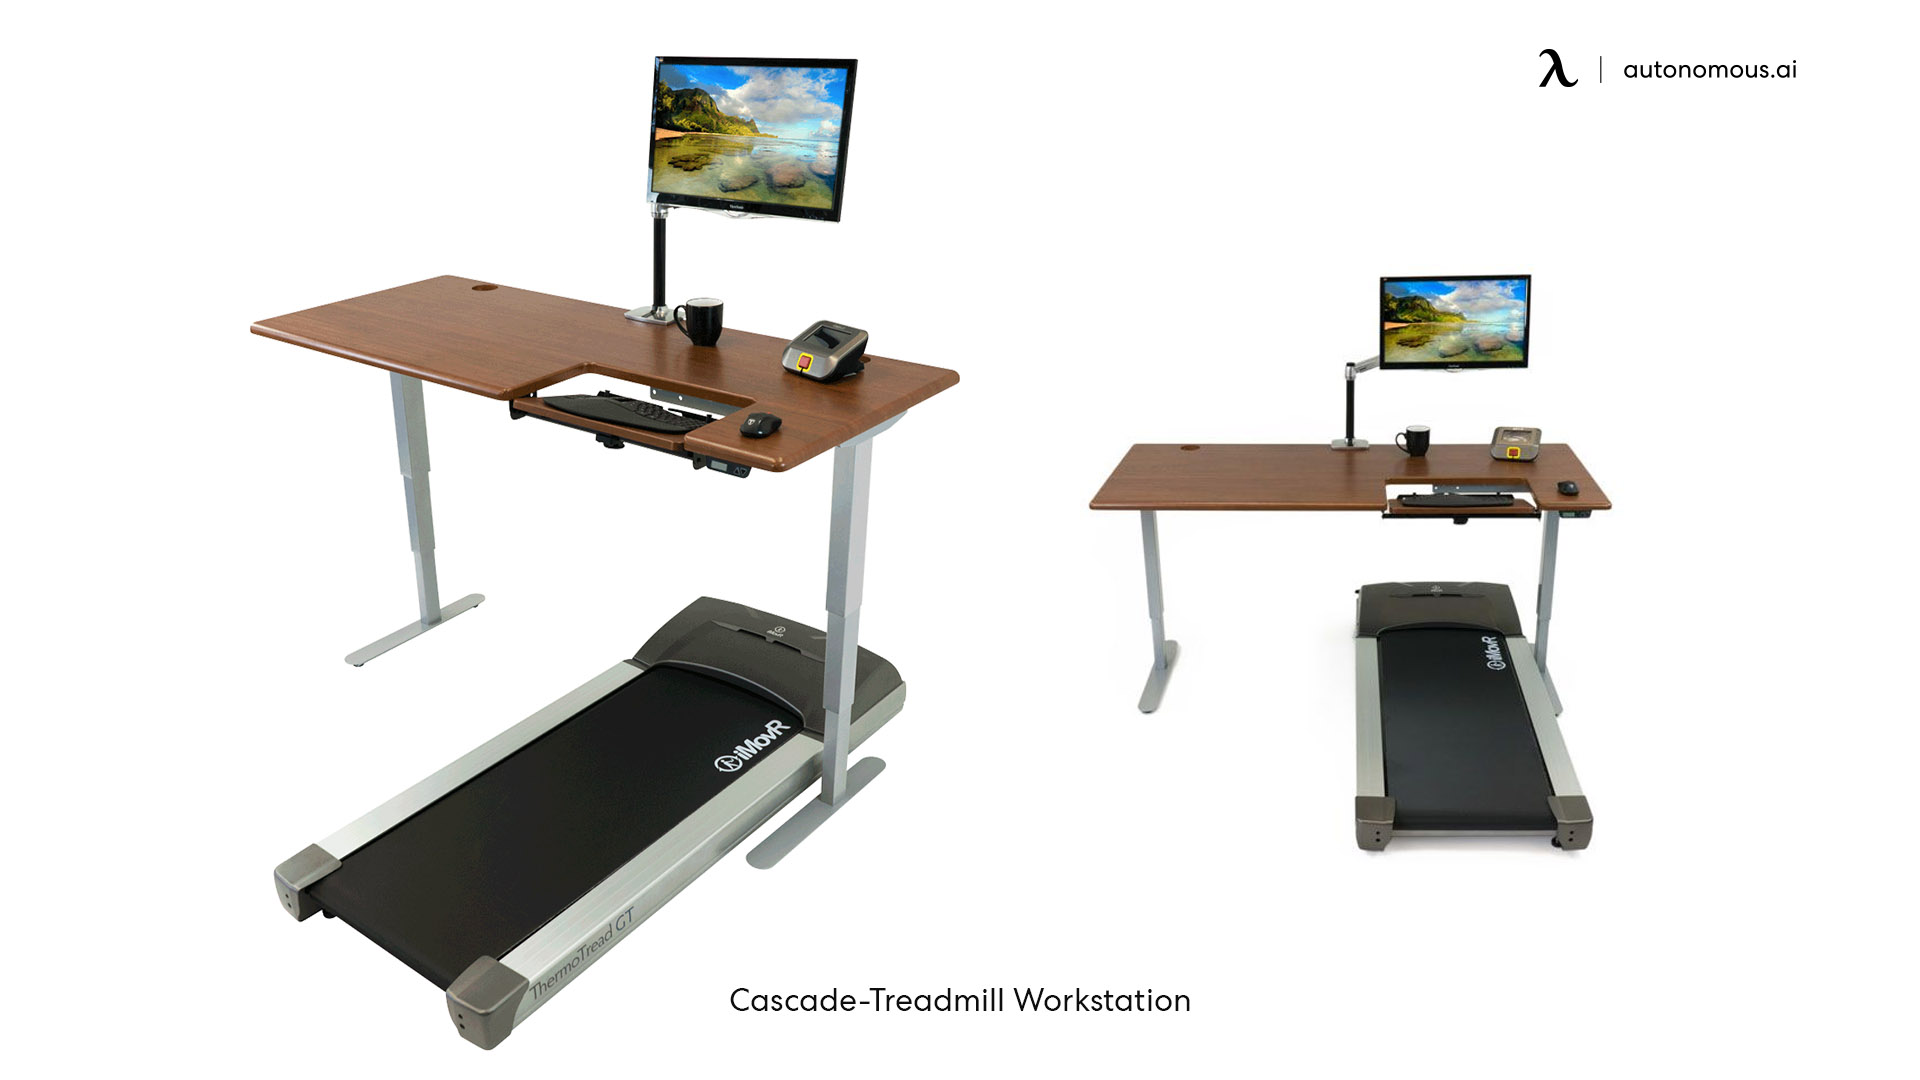 Cascade-Treadmill Workstation